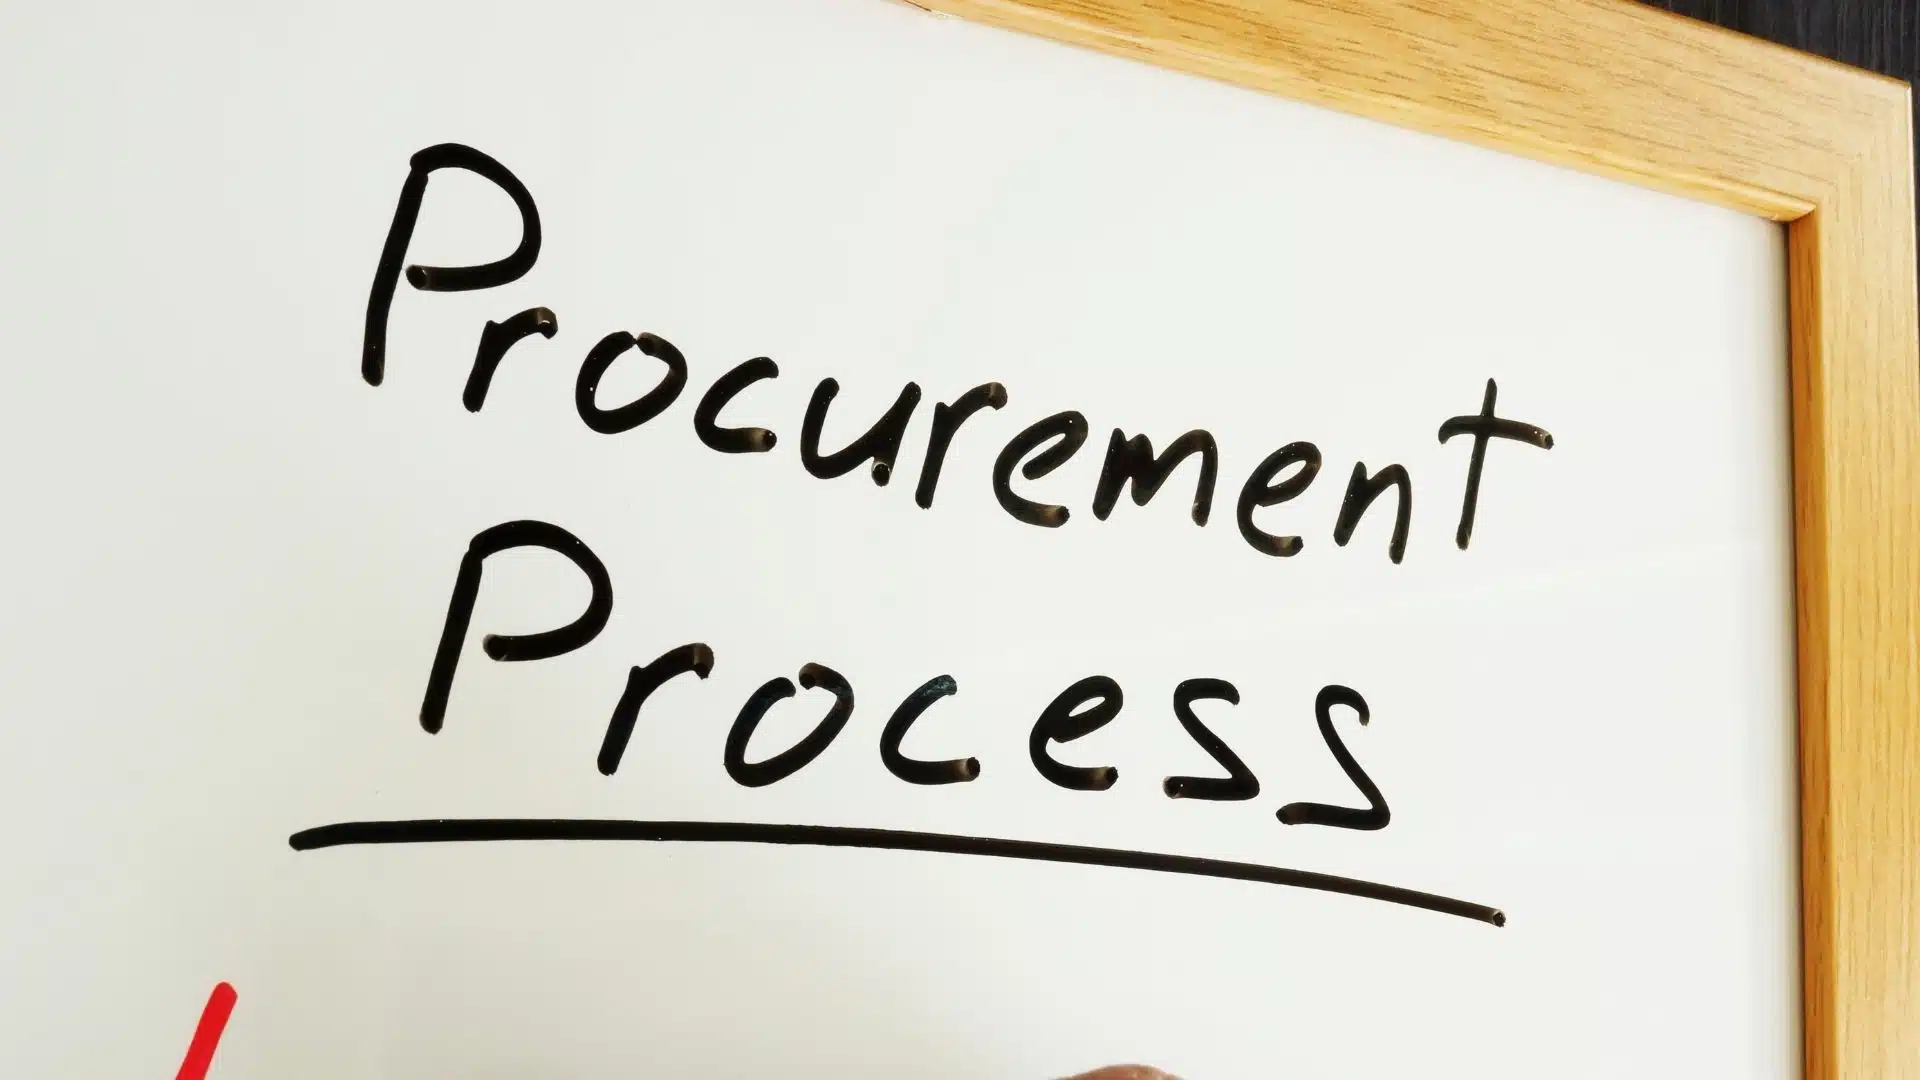 proses procurement (https://accounting.binus.ac.id/2021/12/23/perbedaan-procurement-dan-purchasing/)